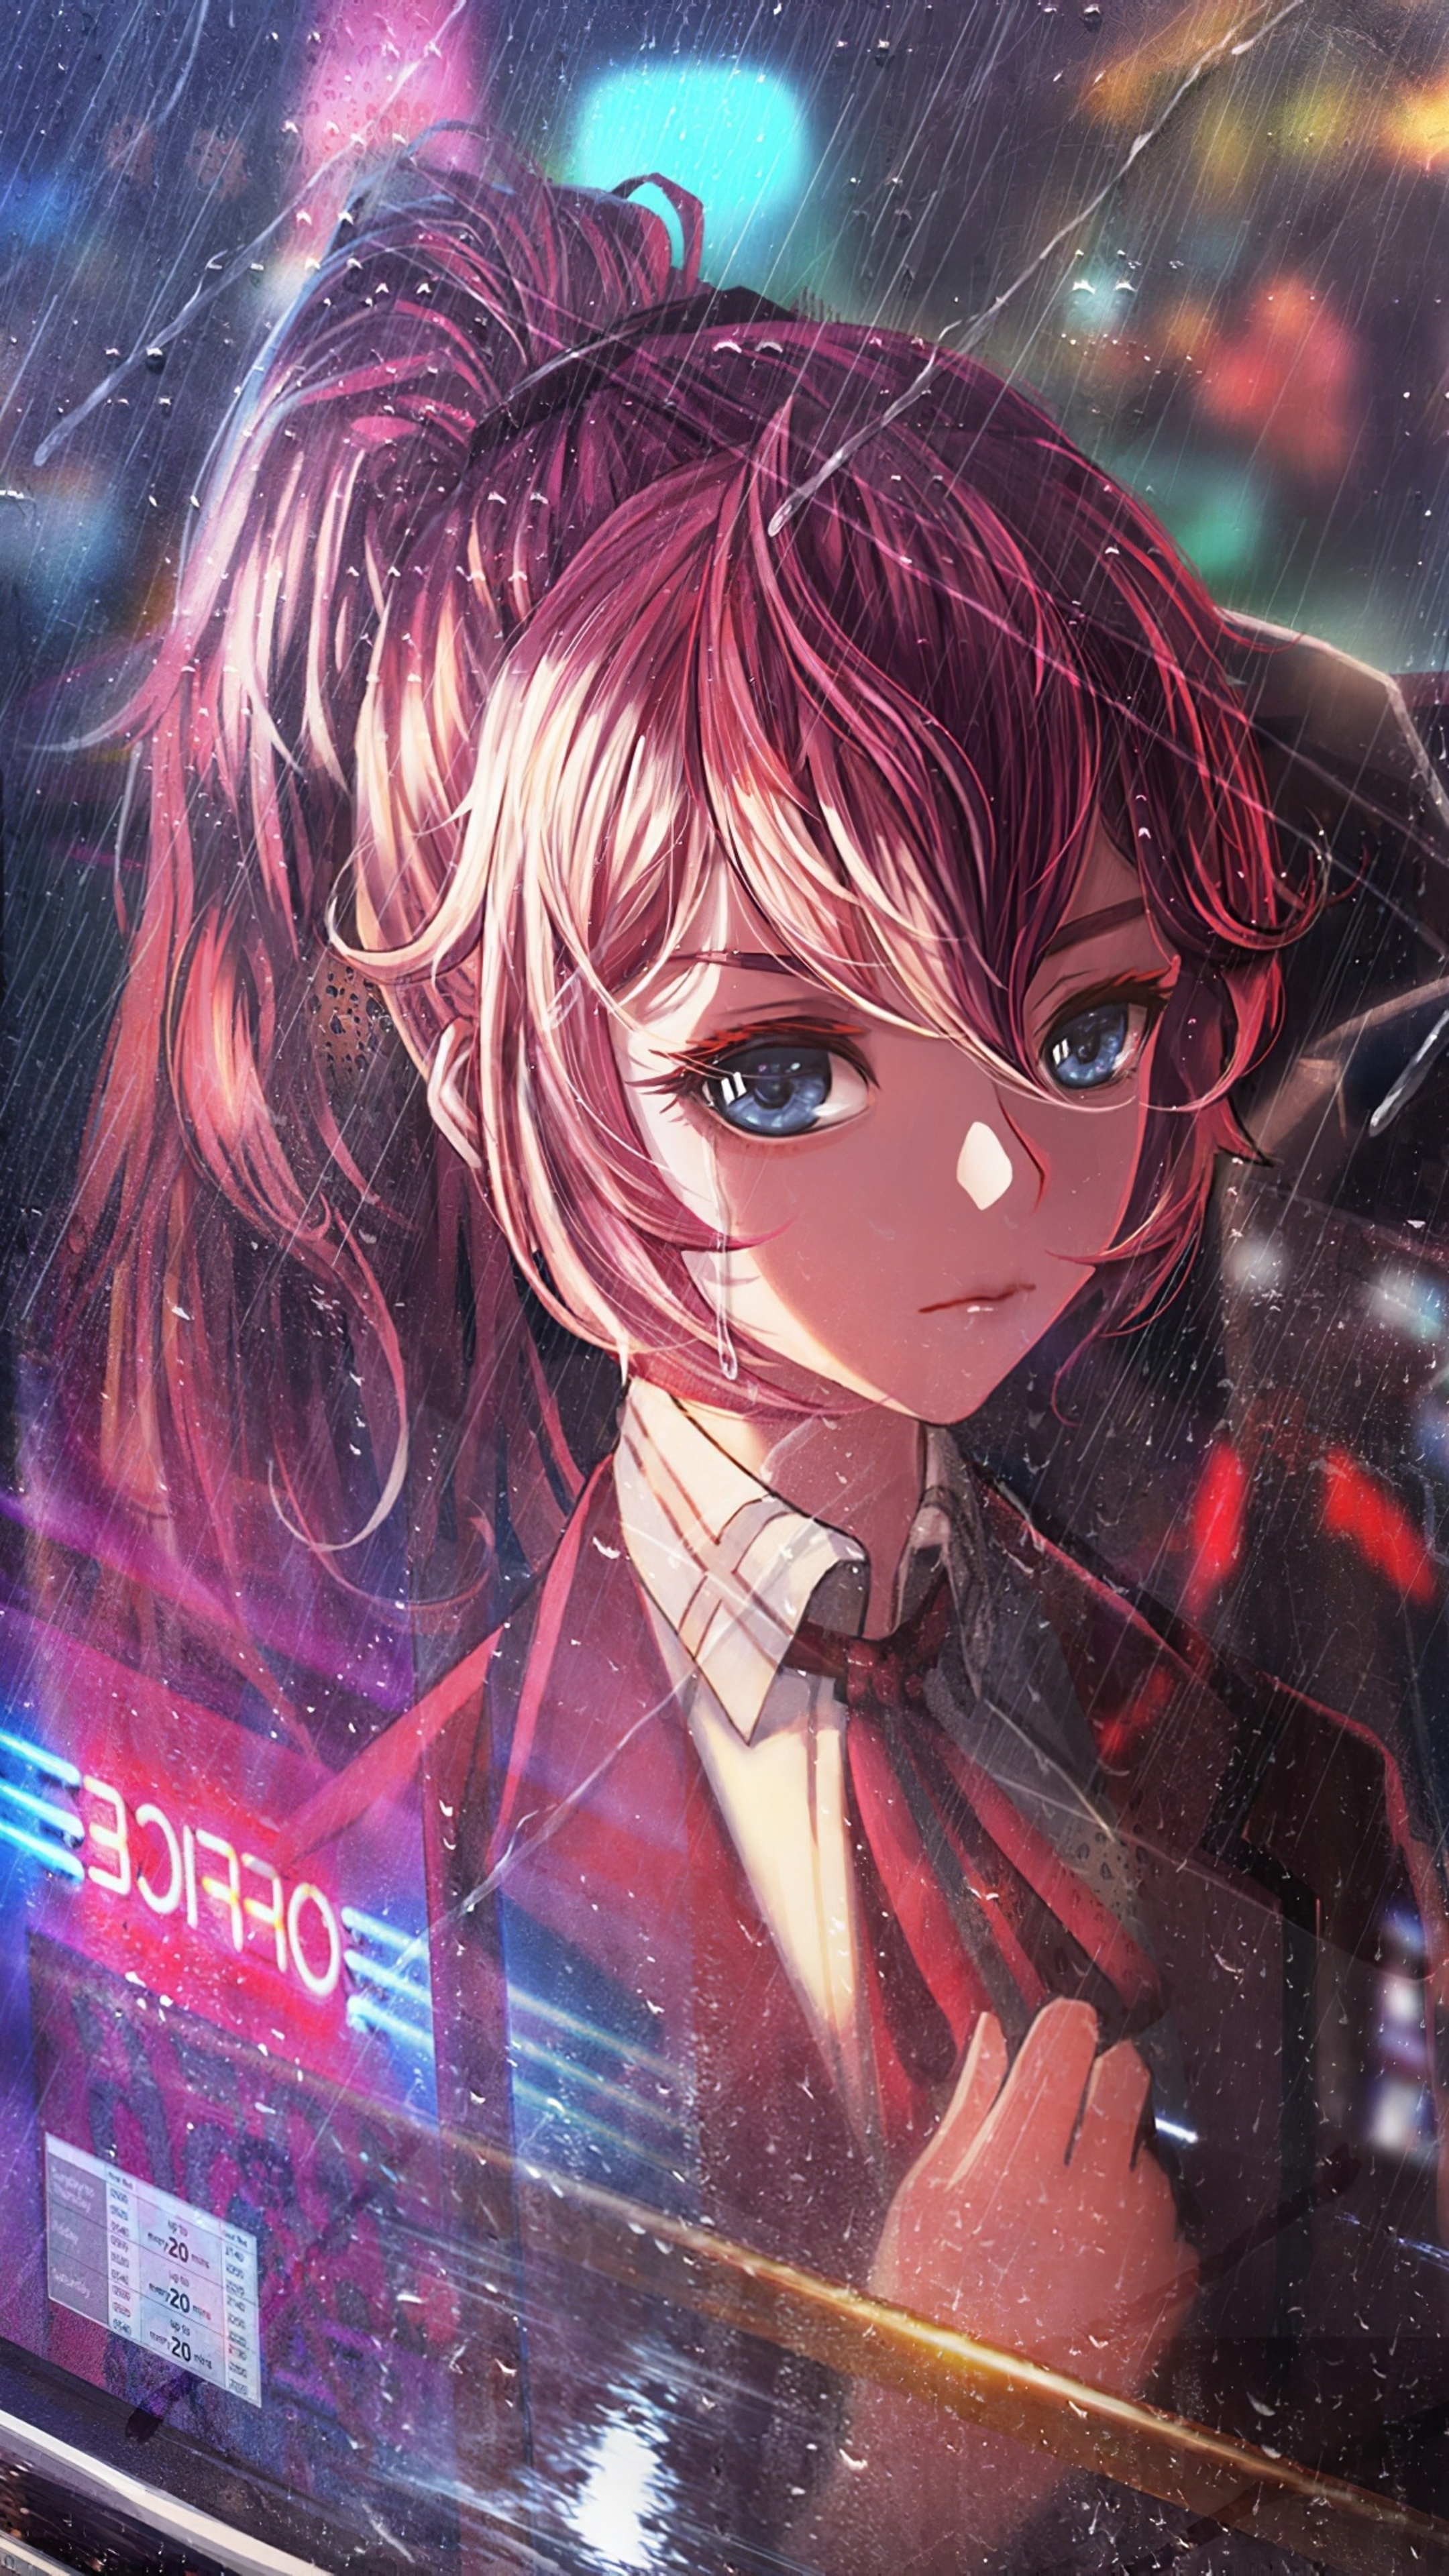 Anime Girl: Bus Window, Neon City, Illustration. 2160x3840 4K Background.